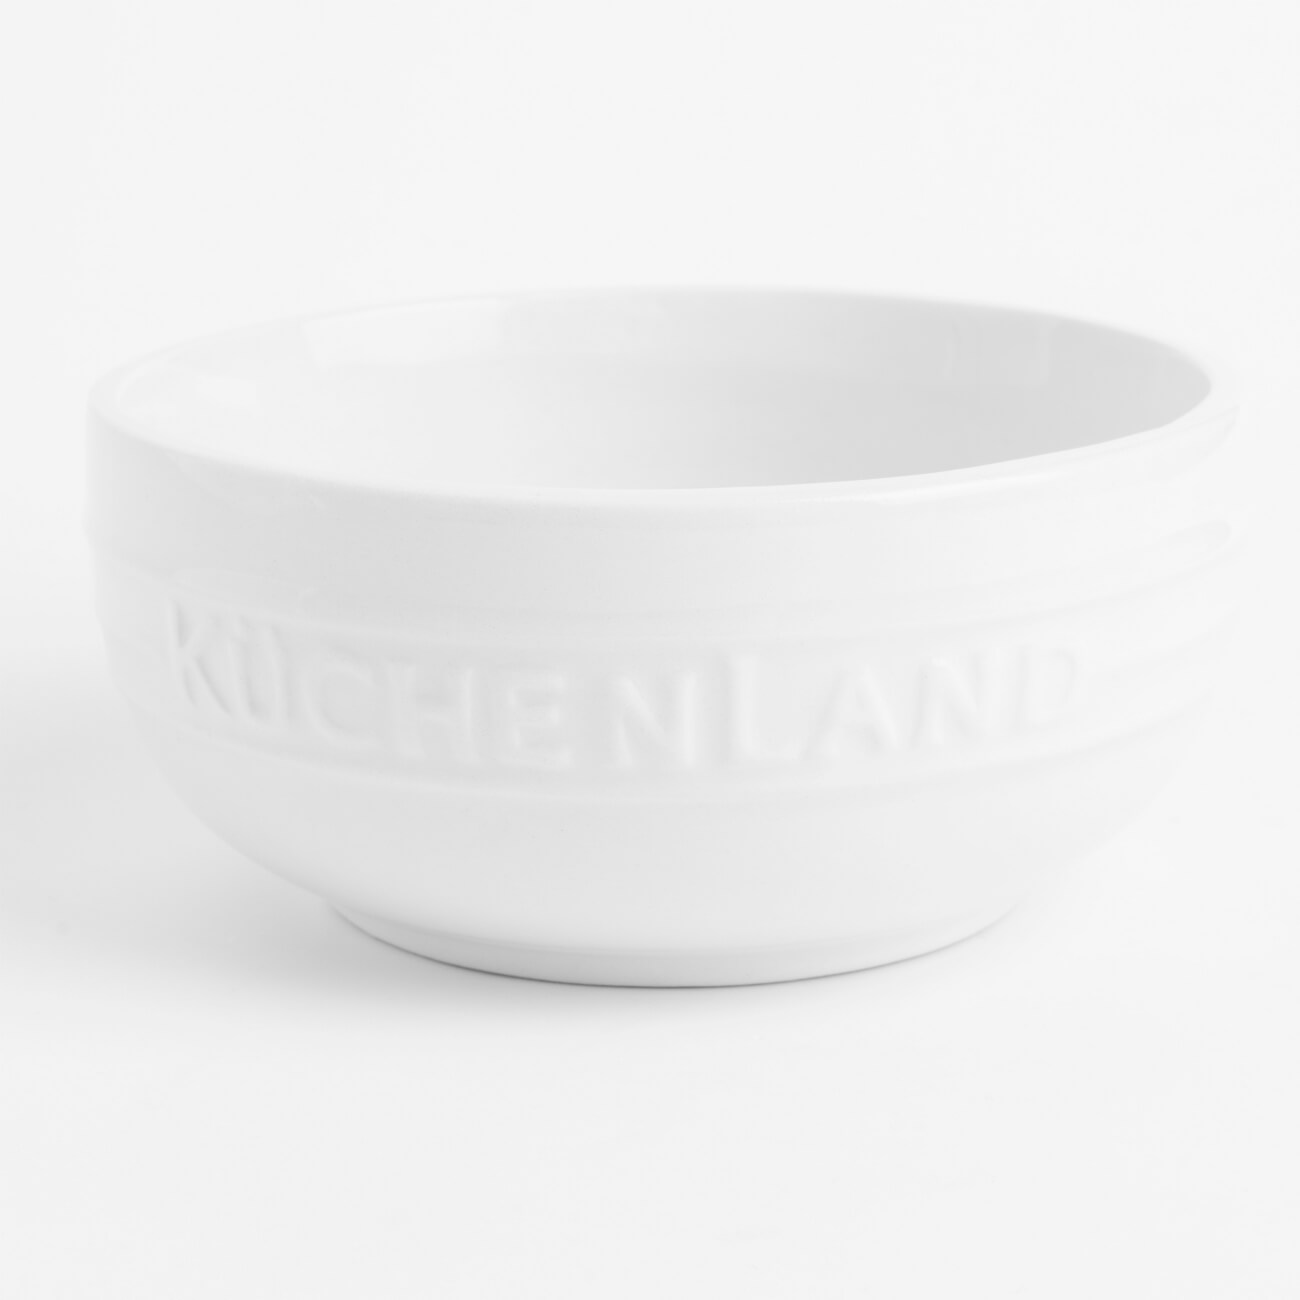 Салатник, 15х7 см, 700 мл, керамика, белая, Ceramo kuchenland подставка для кухонных принадлежностей 15 см керамика белая ceramo